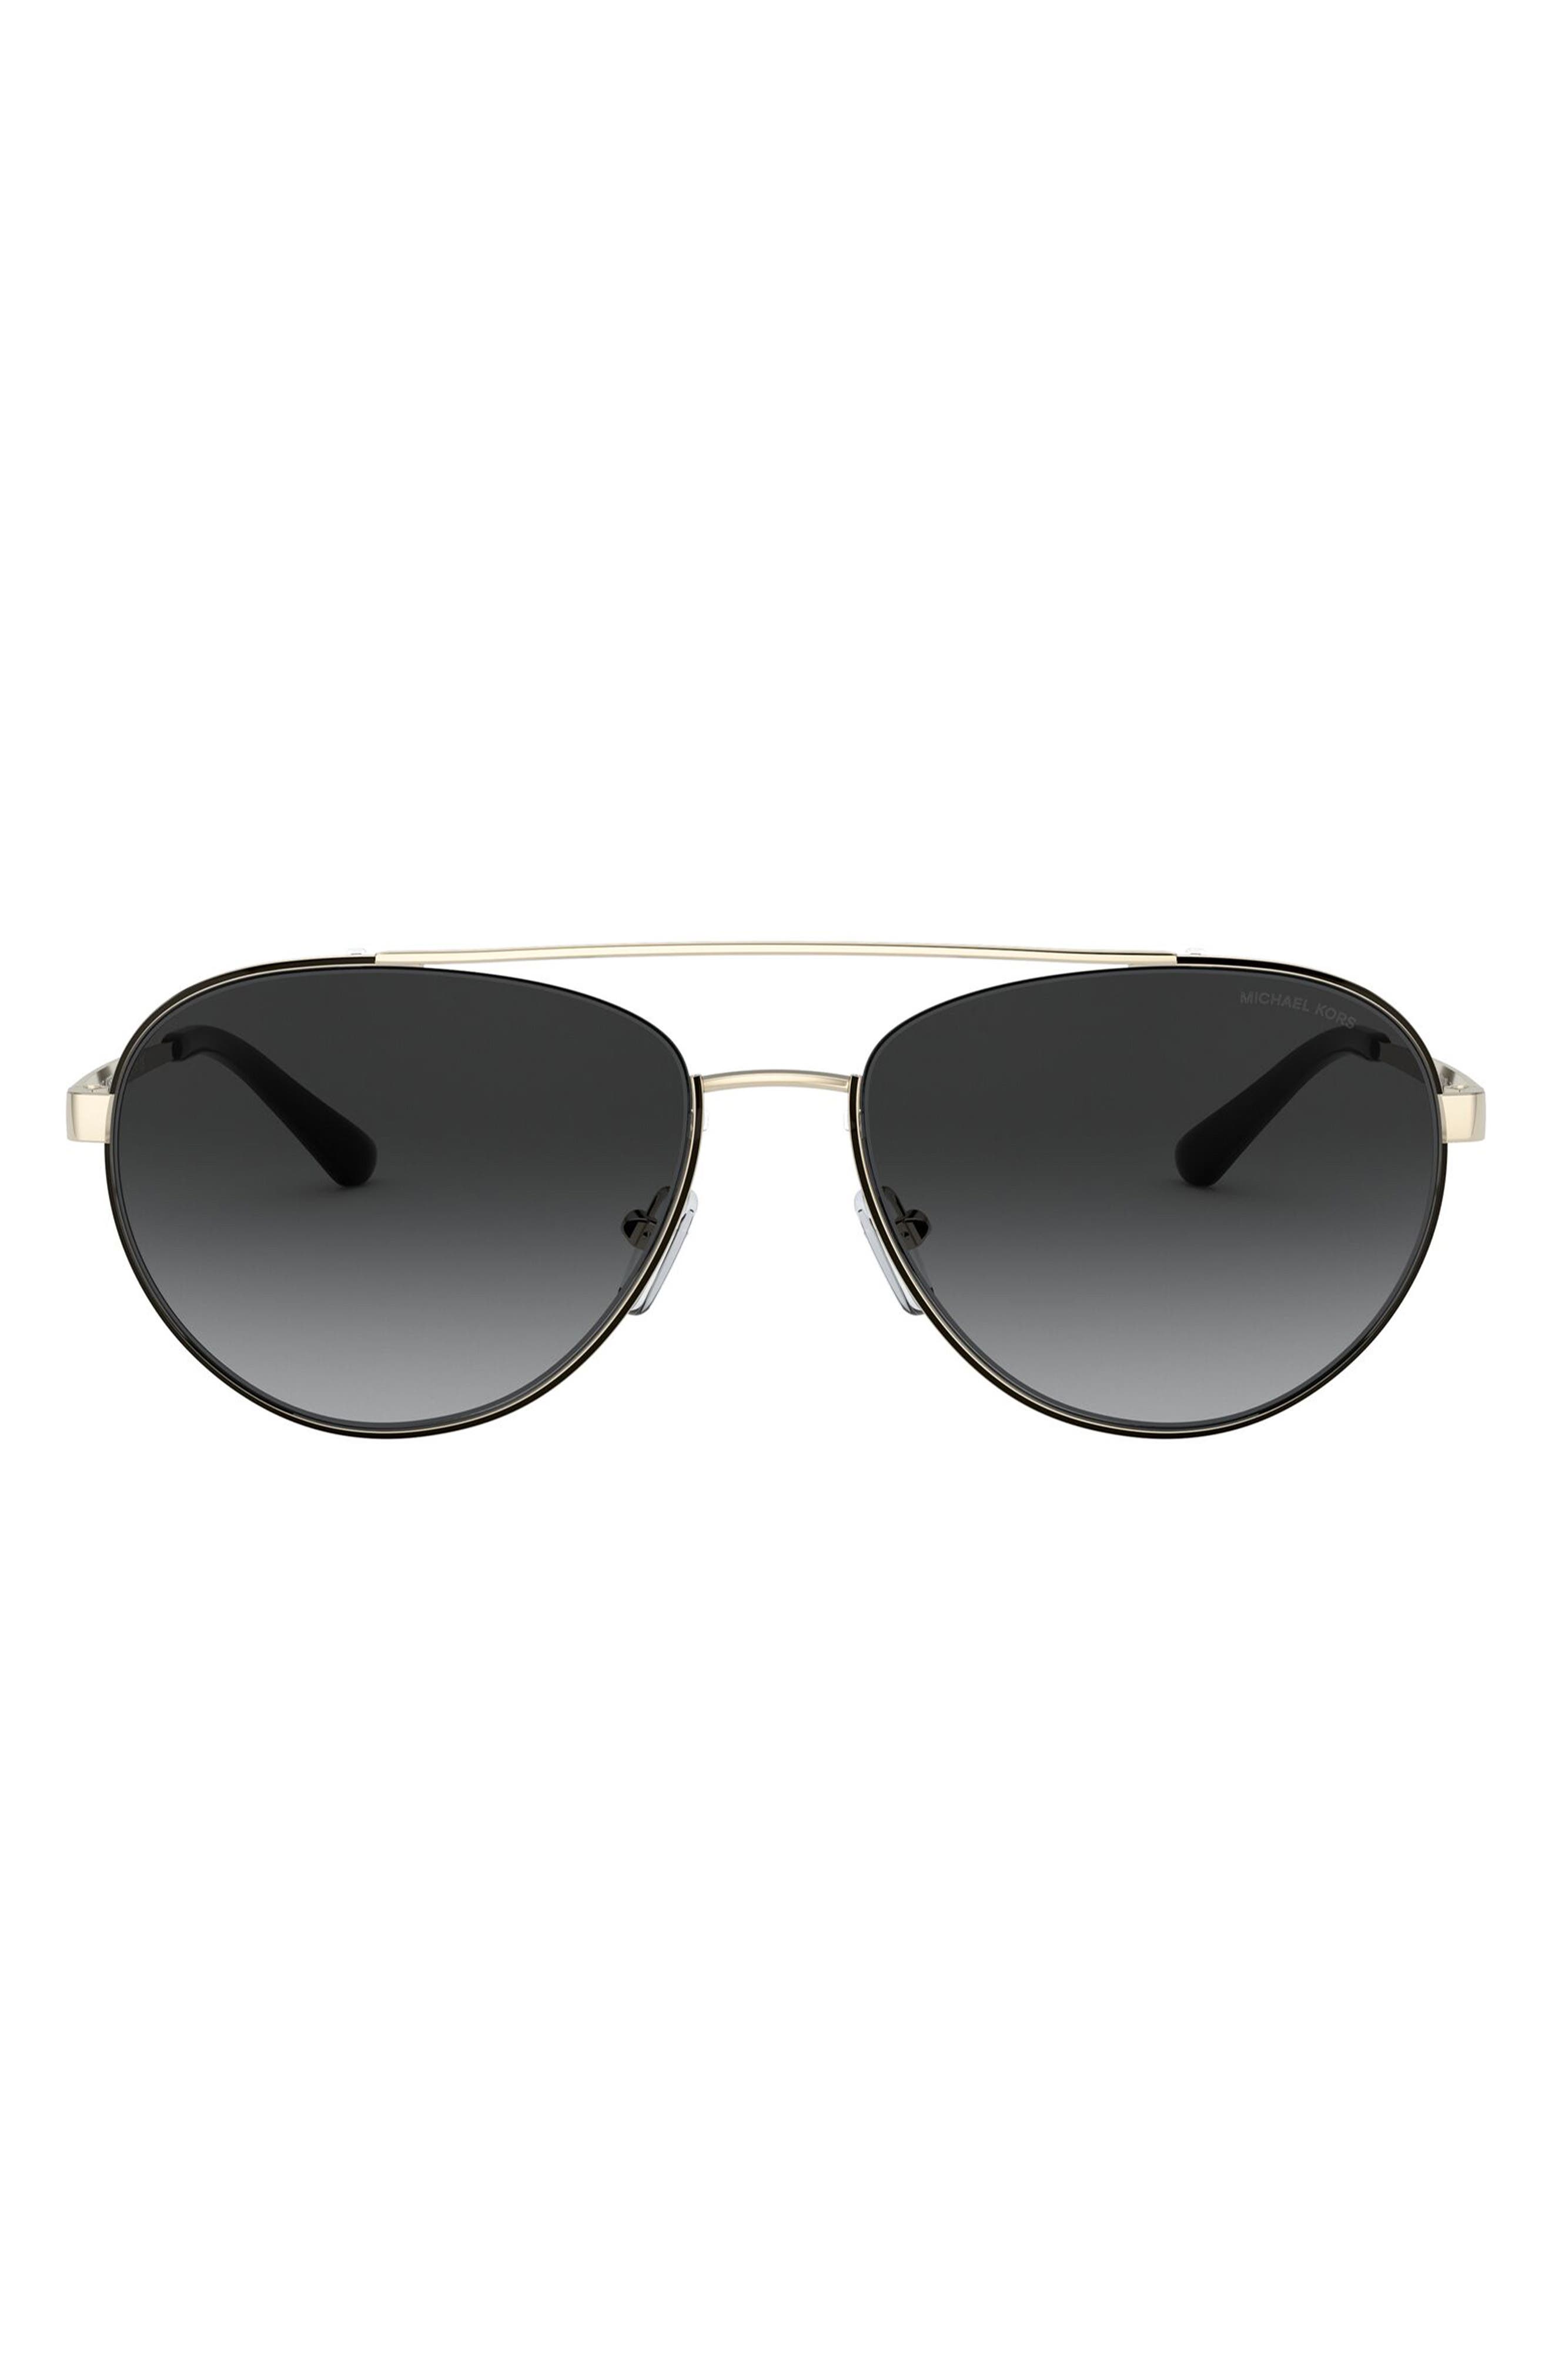 Michael Kors 59mm Gradient Aviator Sunglasses in Gold Black at Nordstrom